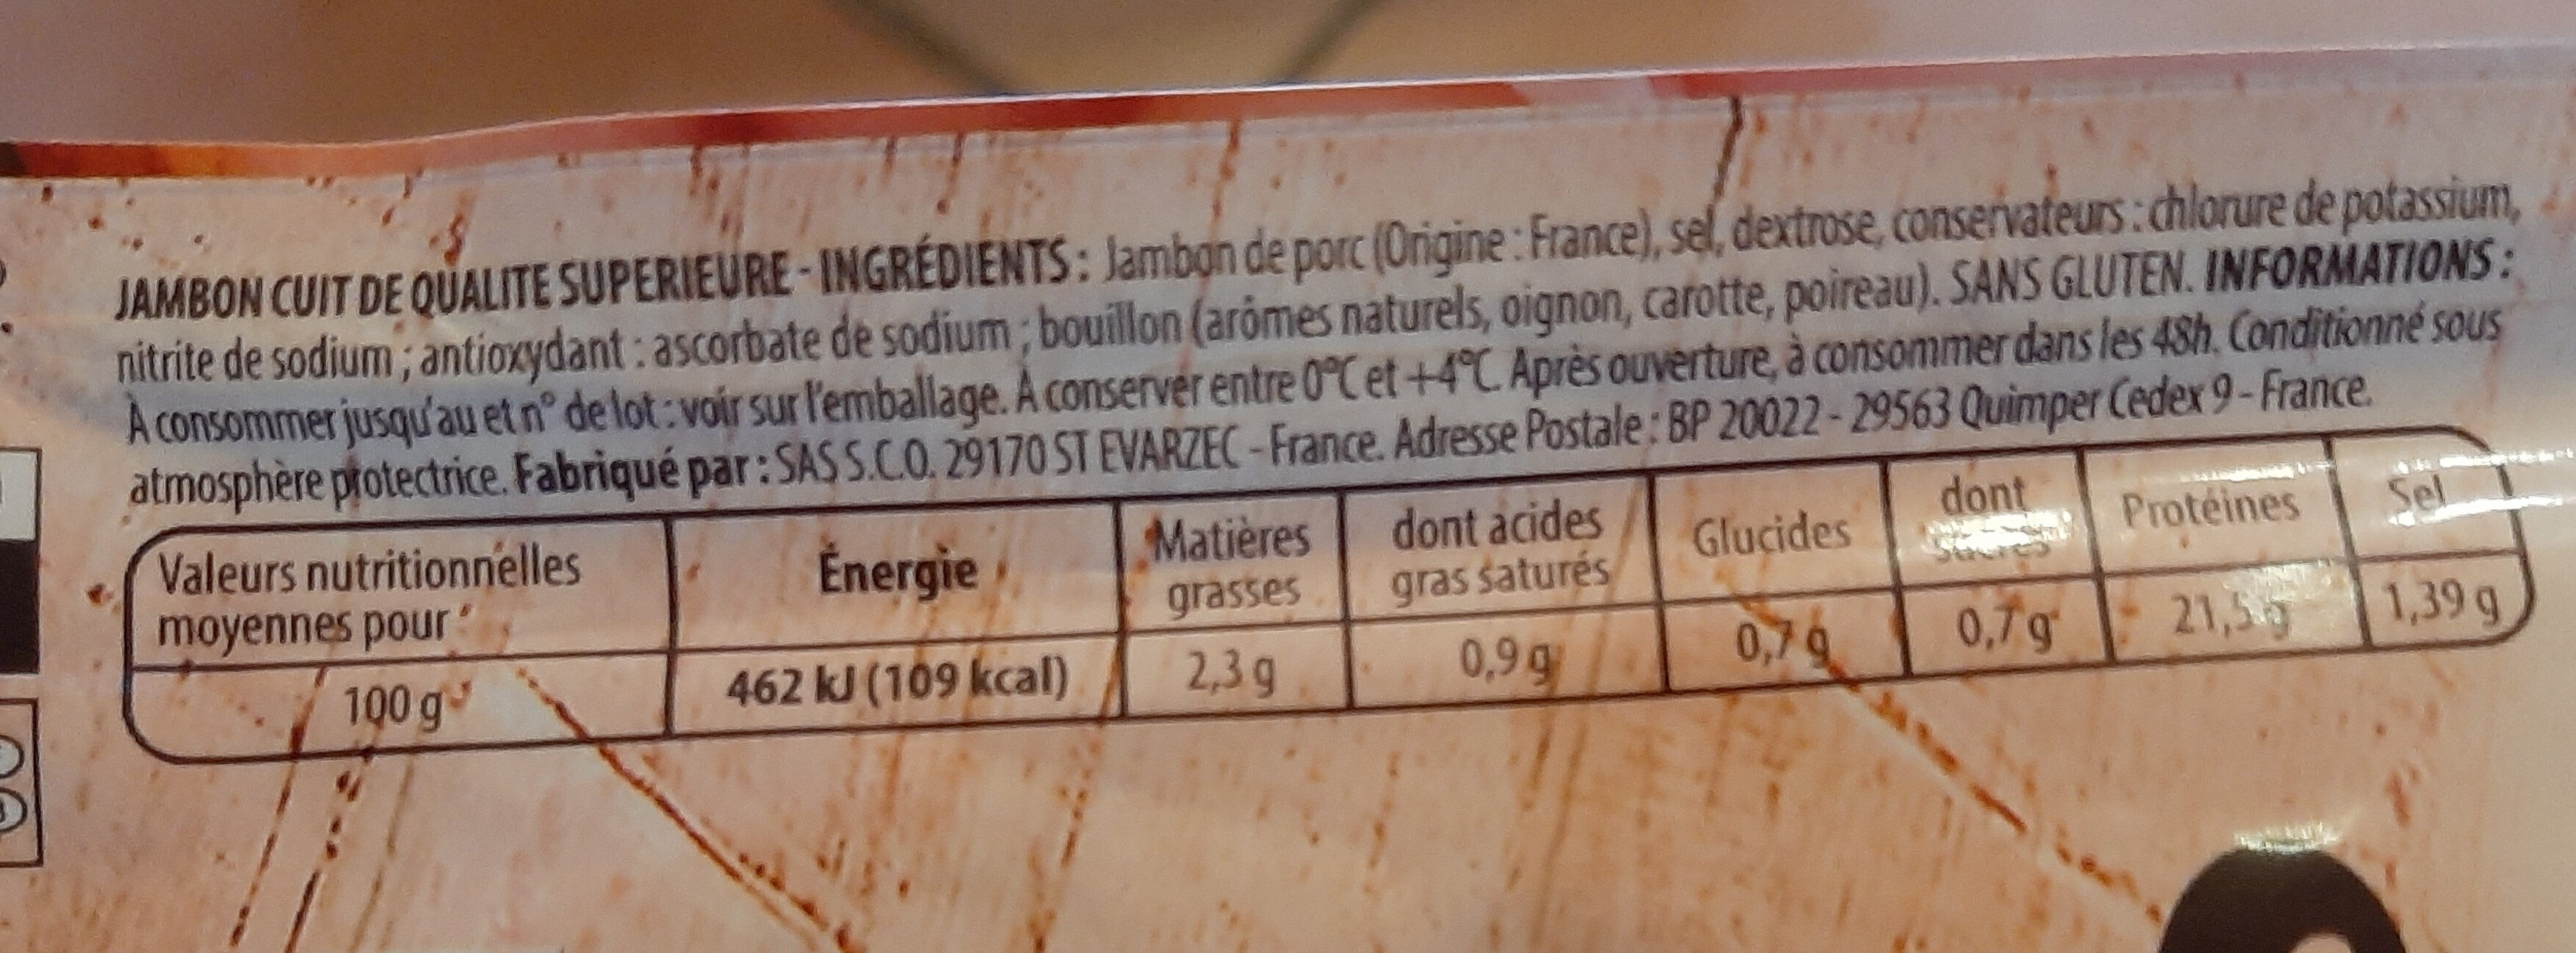 jambon Supérieur  _25% de sel - Ingredienti - fr